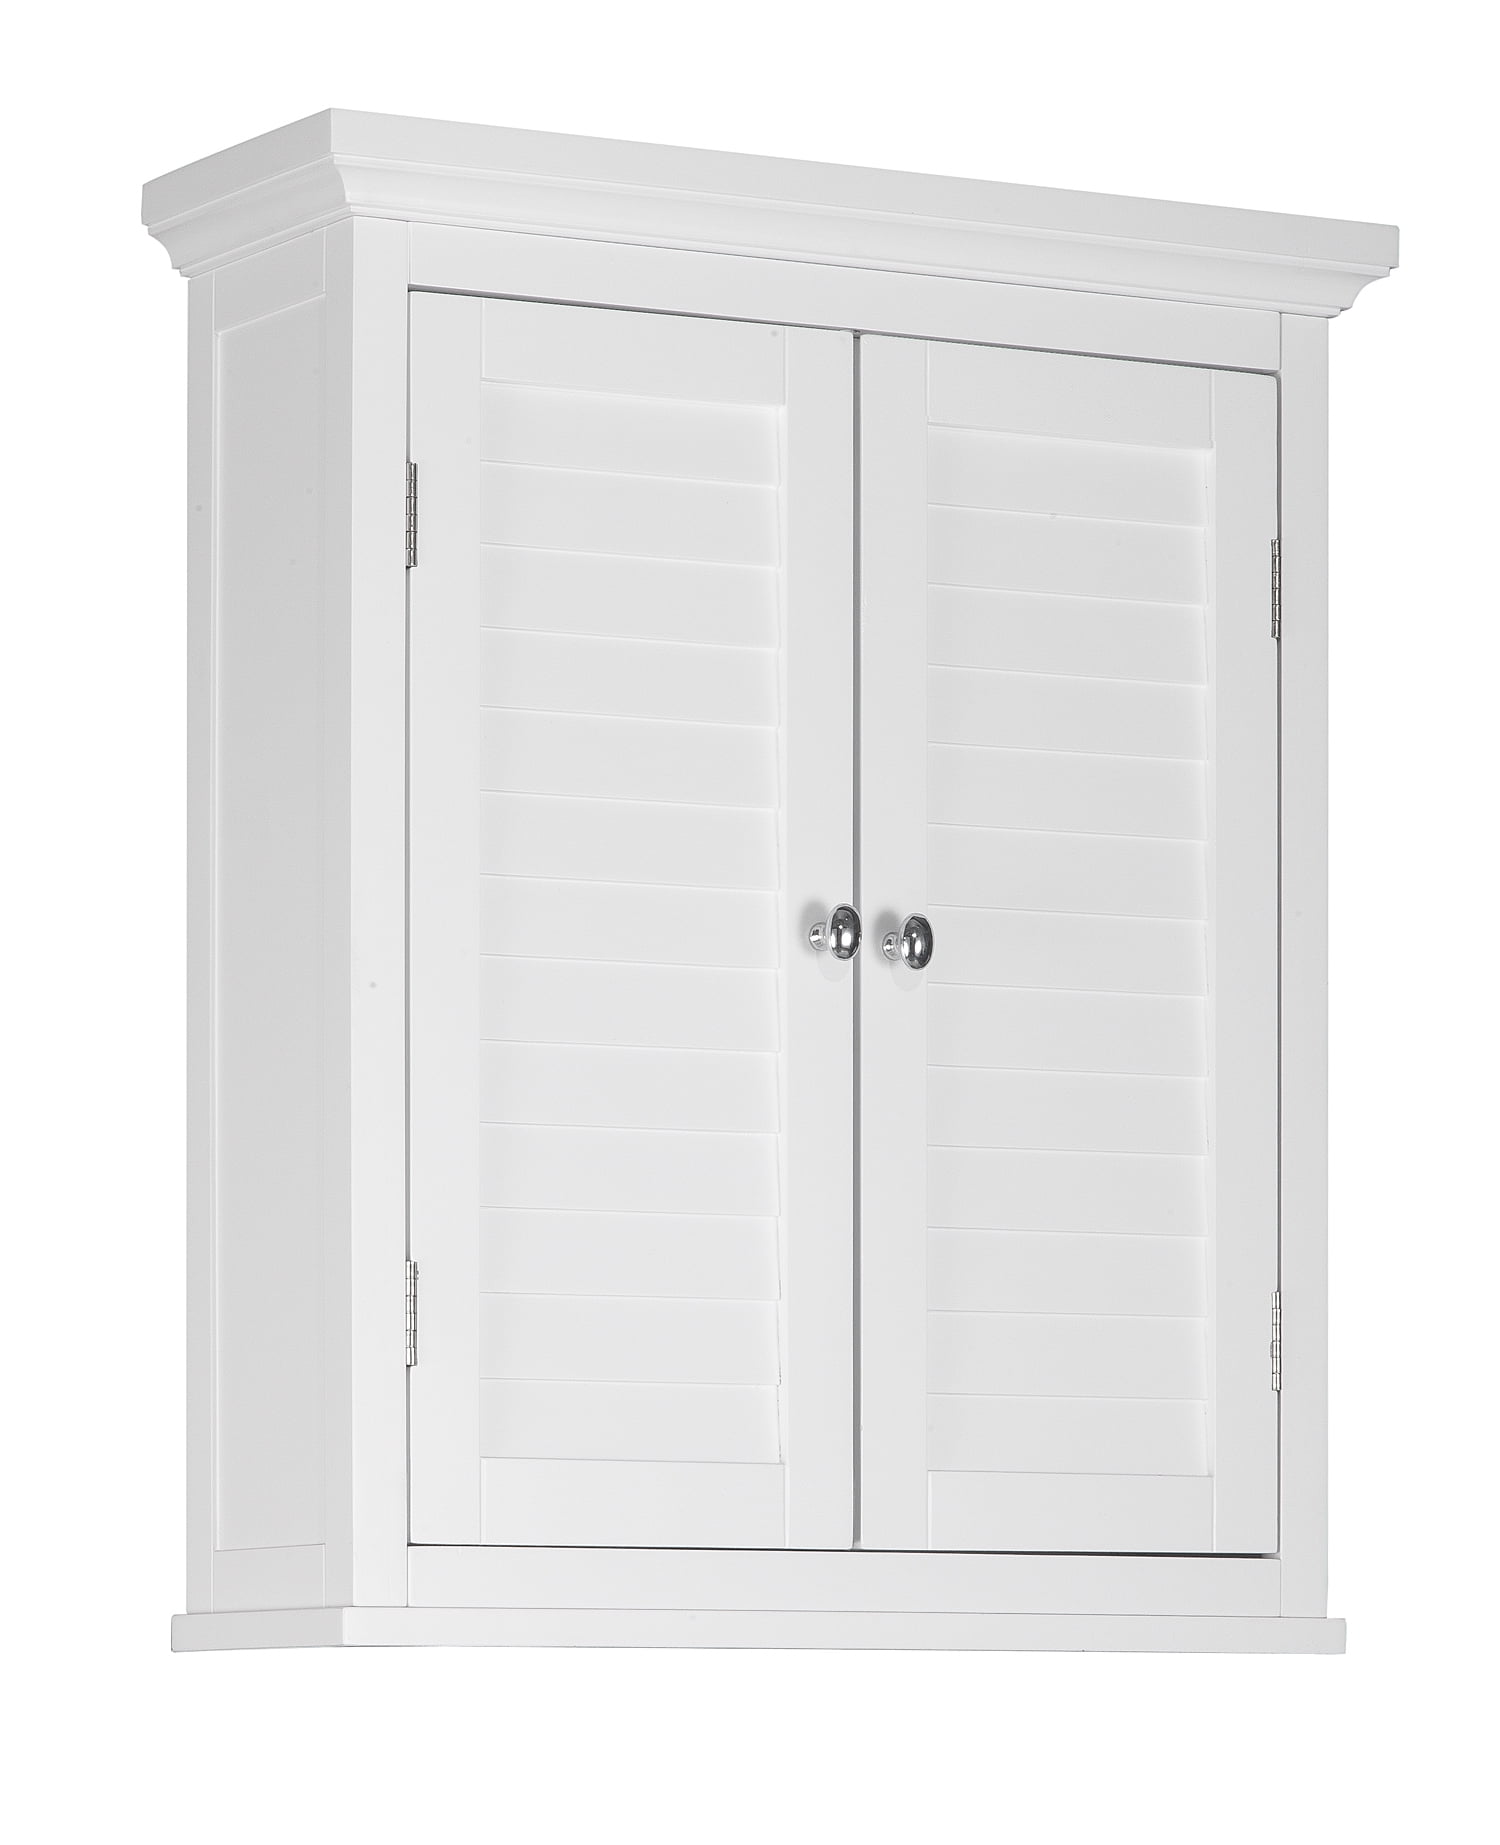 NEWLY DESIGNED SINGLE DOOR BATHROOM WALL CABINET-WHITE 